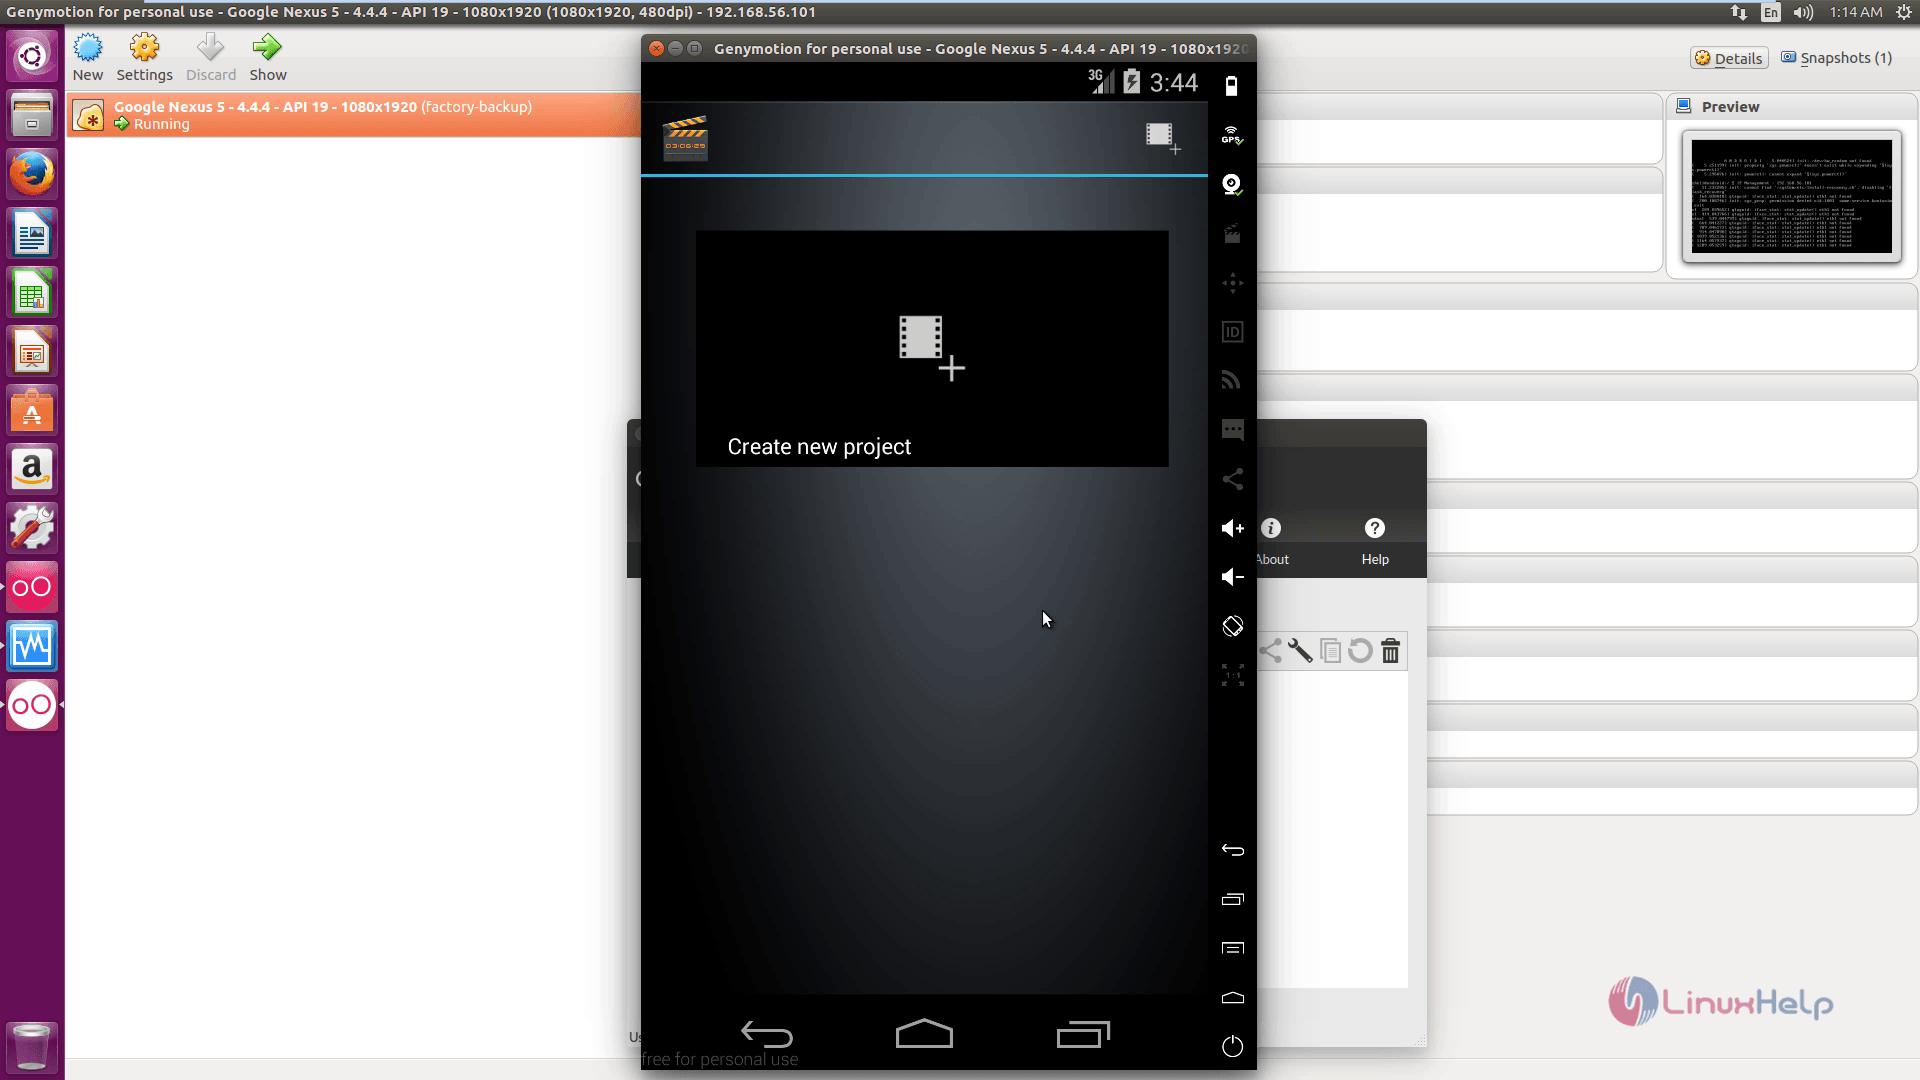 run-Android-Apps-Ubuntu-Genymotion-Emulator-testing-and-presentation-view-Movie-Studio